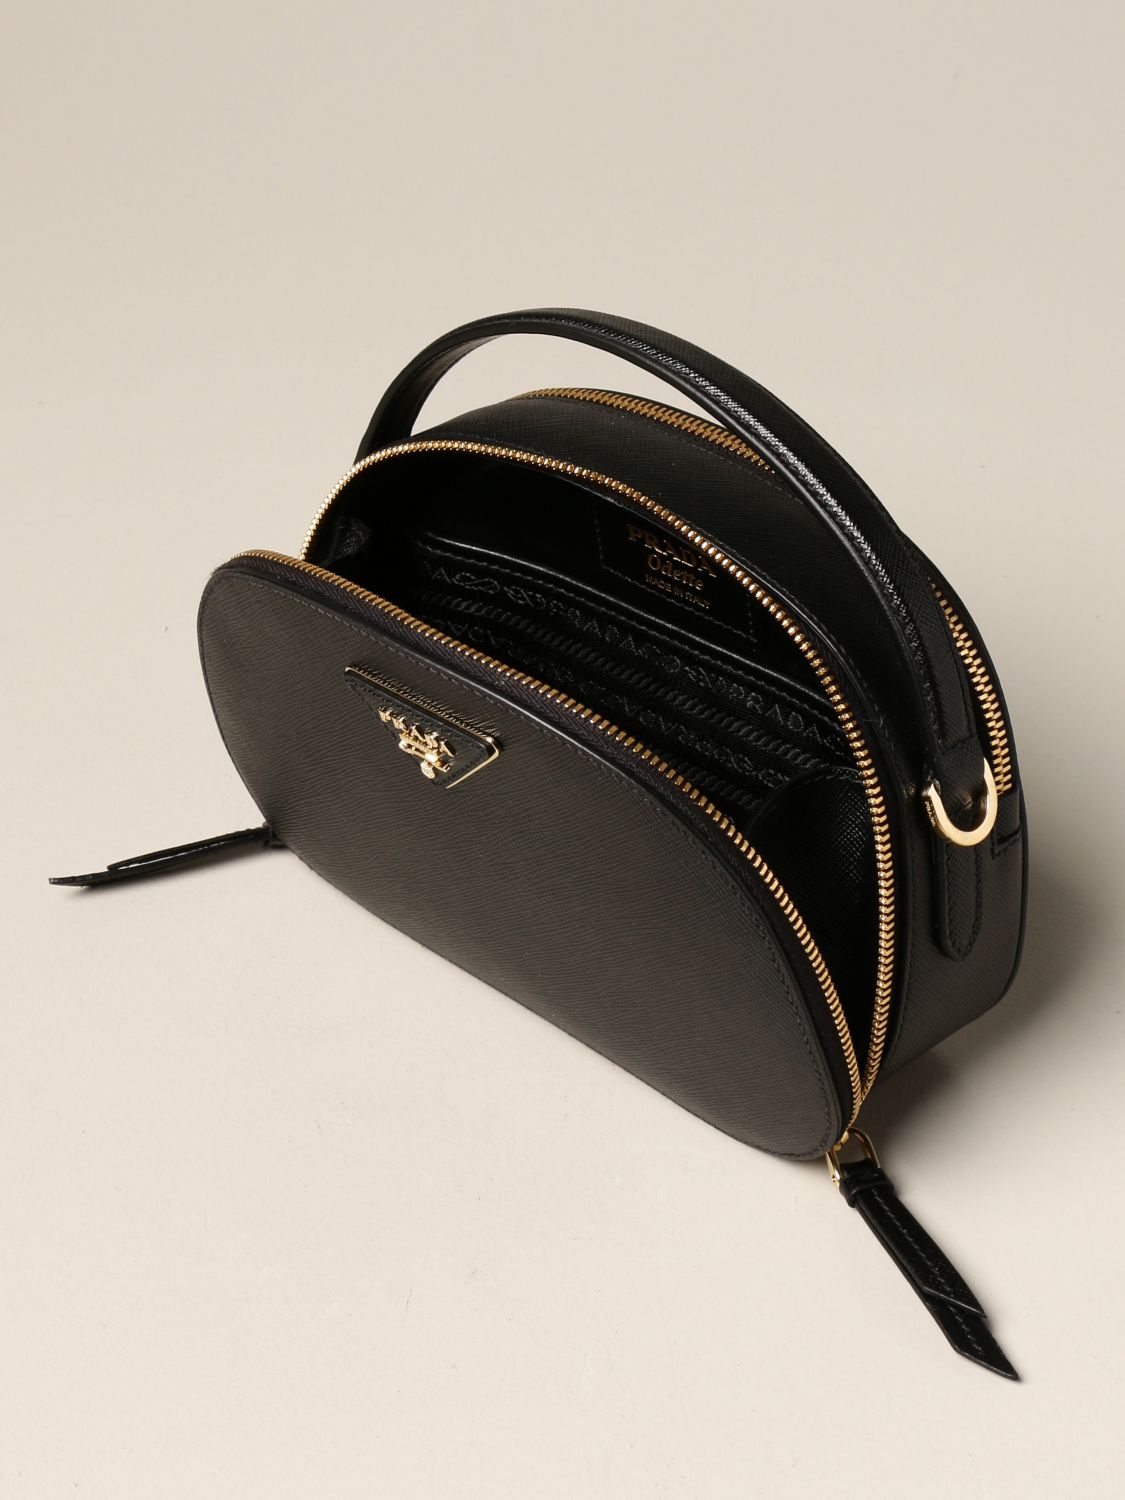 PRADA: Odette bag in saffiano leather - White  Prada mini bag 1BH123 NZV  online at